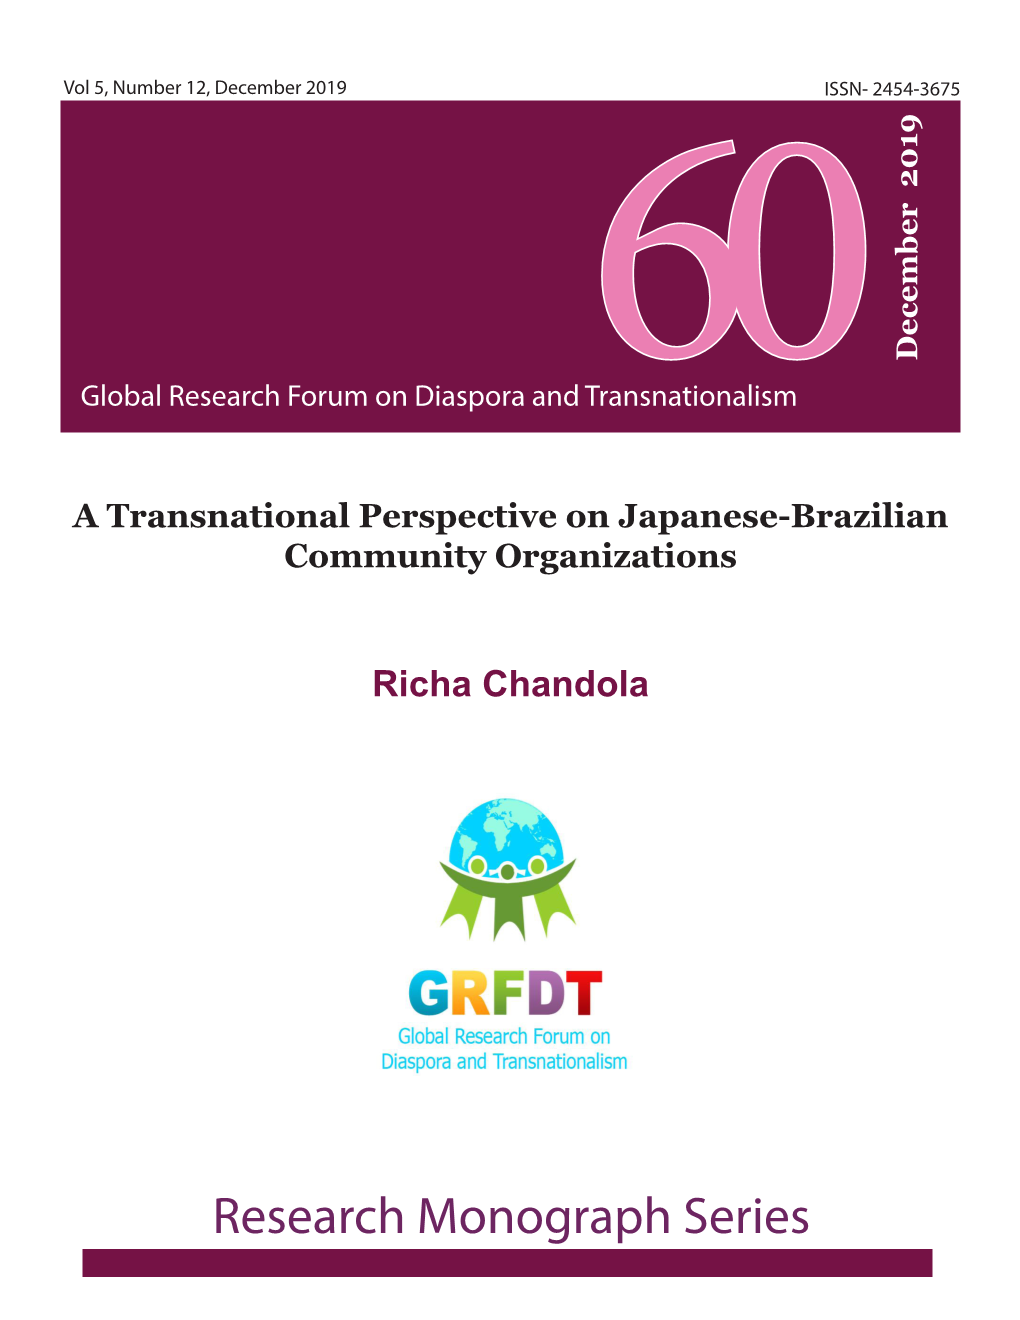 A Transnational Perspective on Japanese-Brazilian Community Organizations